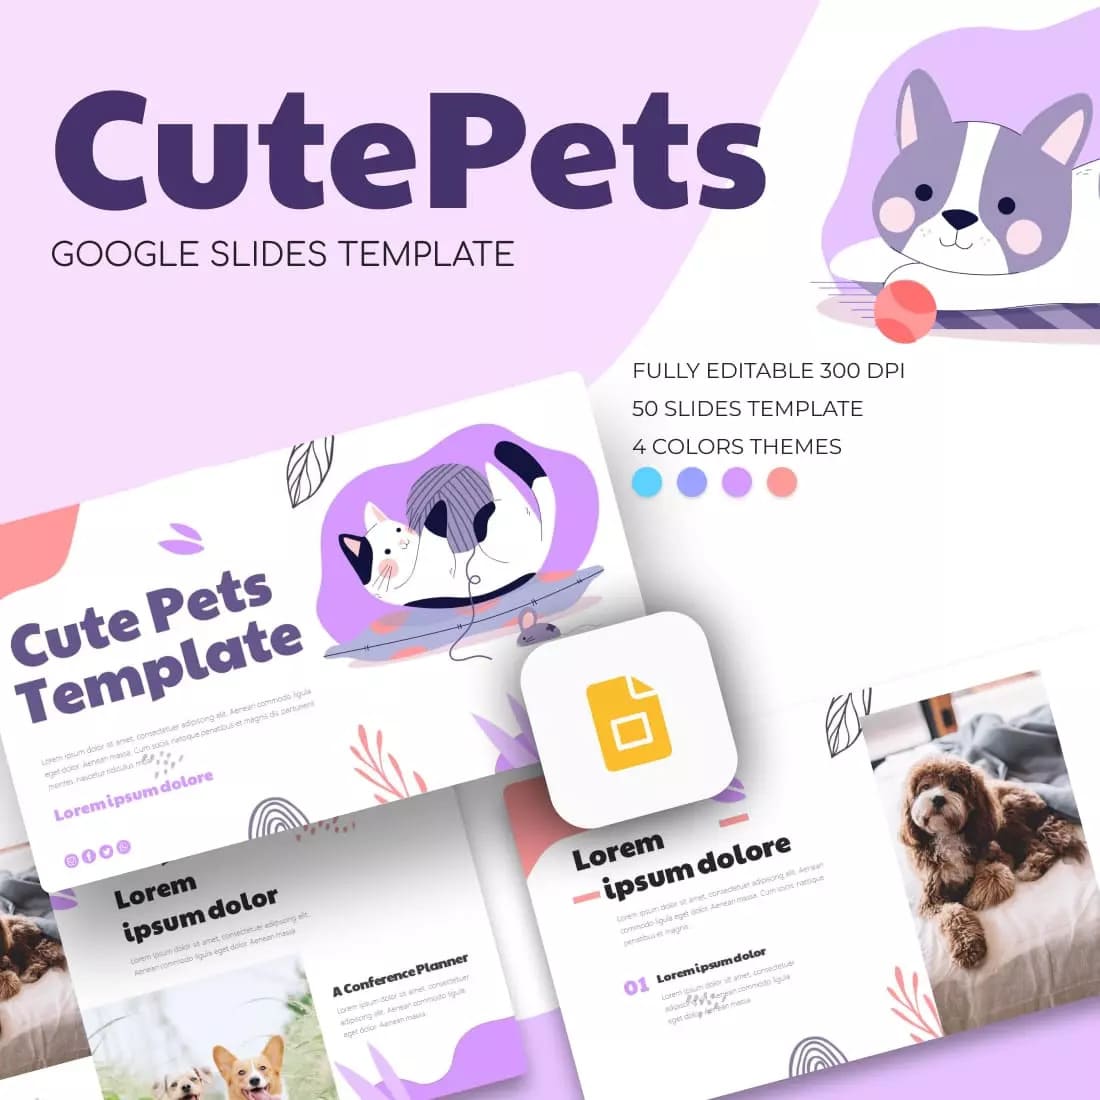 Cute Pets Google Slides Template Preview 4 1.